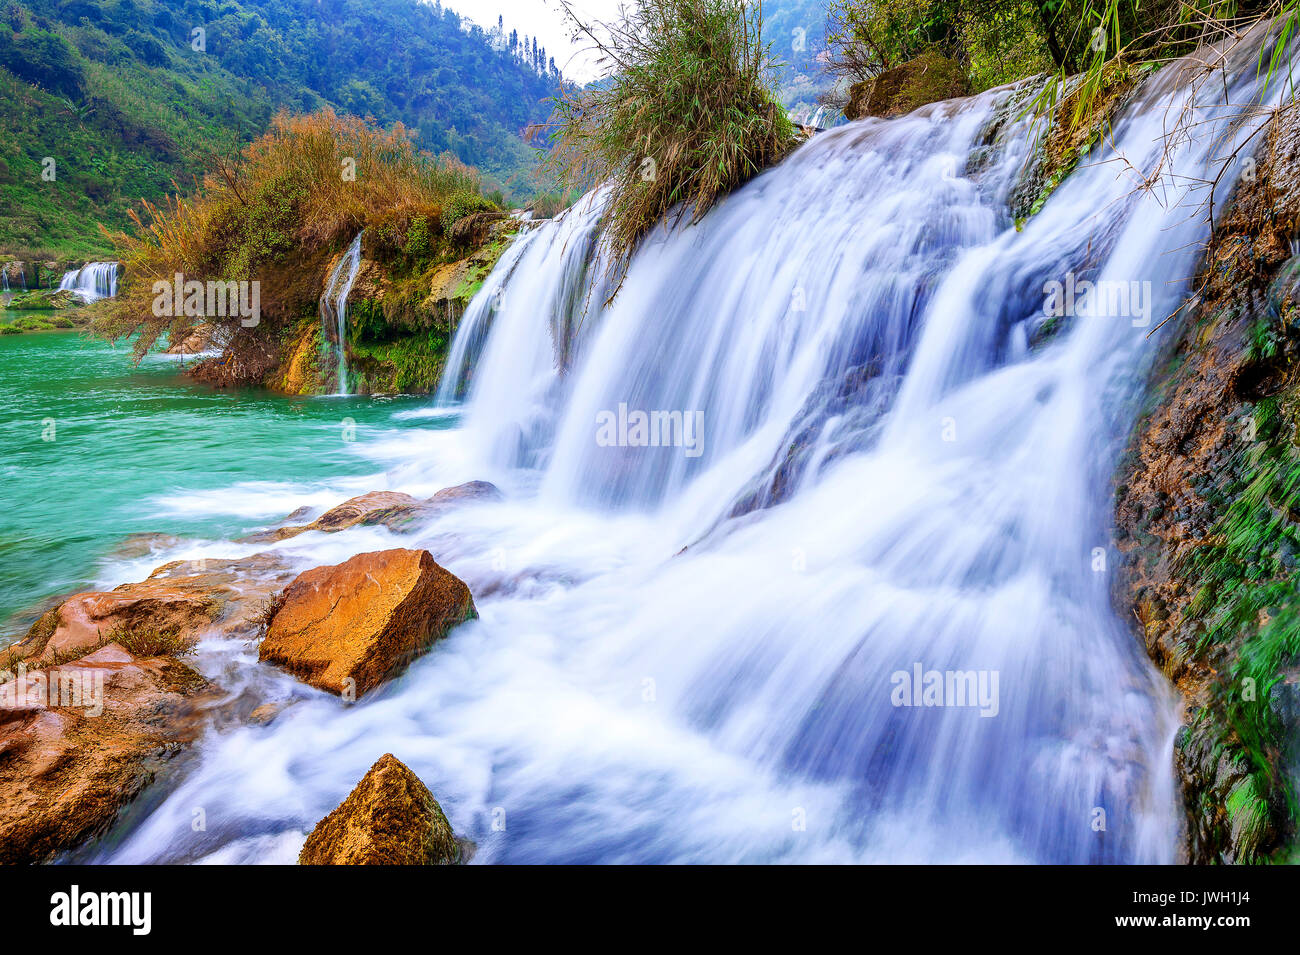 Jiulong waterfall in Luoping, China. Stock Photo